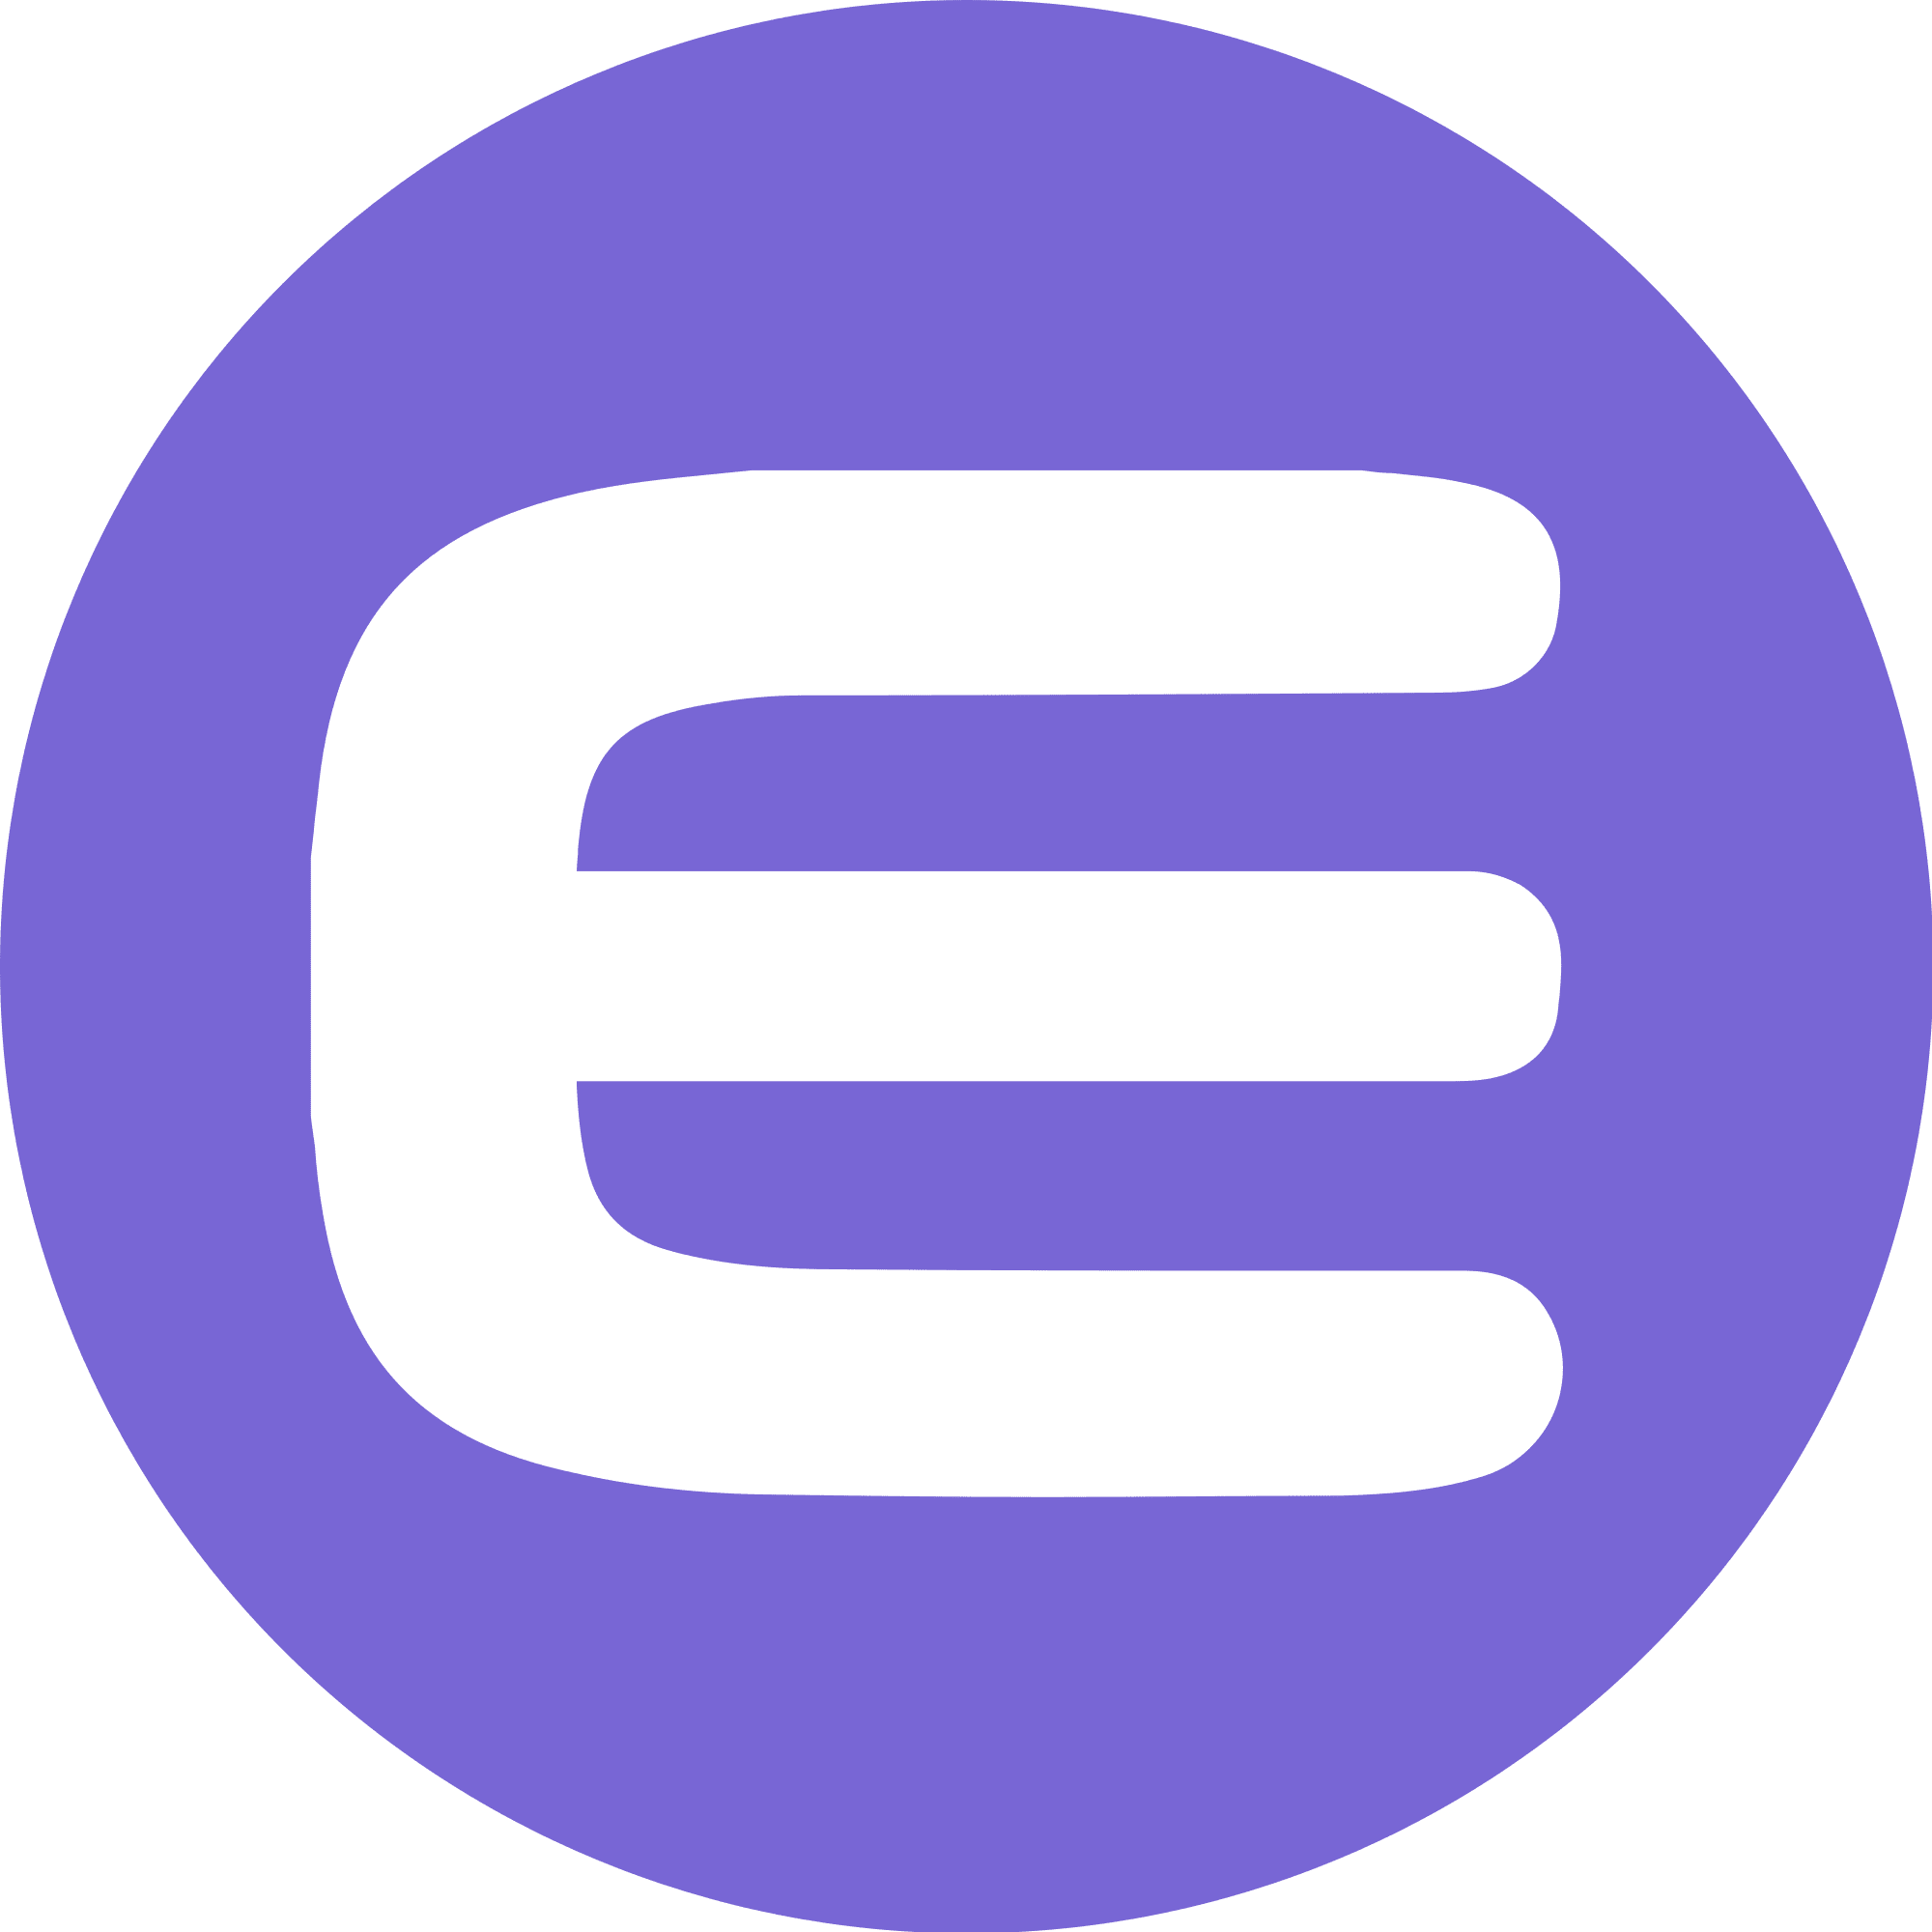 Enjin Coin logo in png format